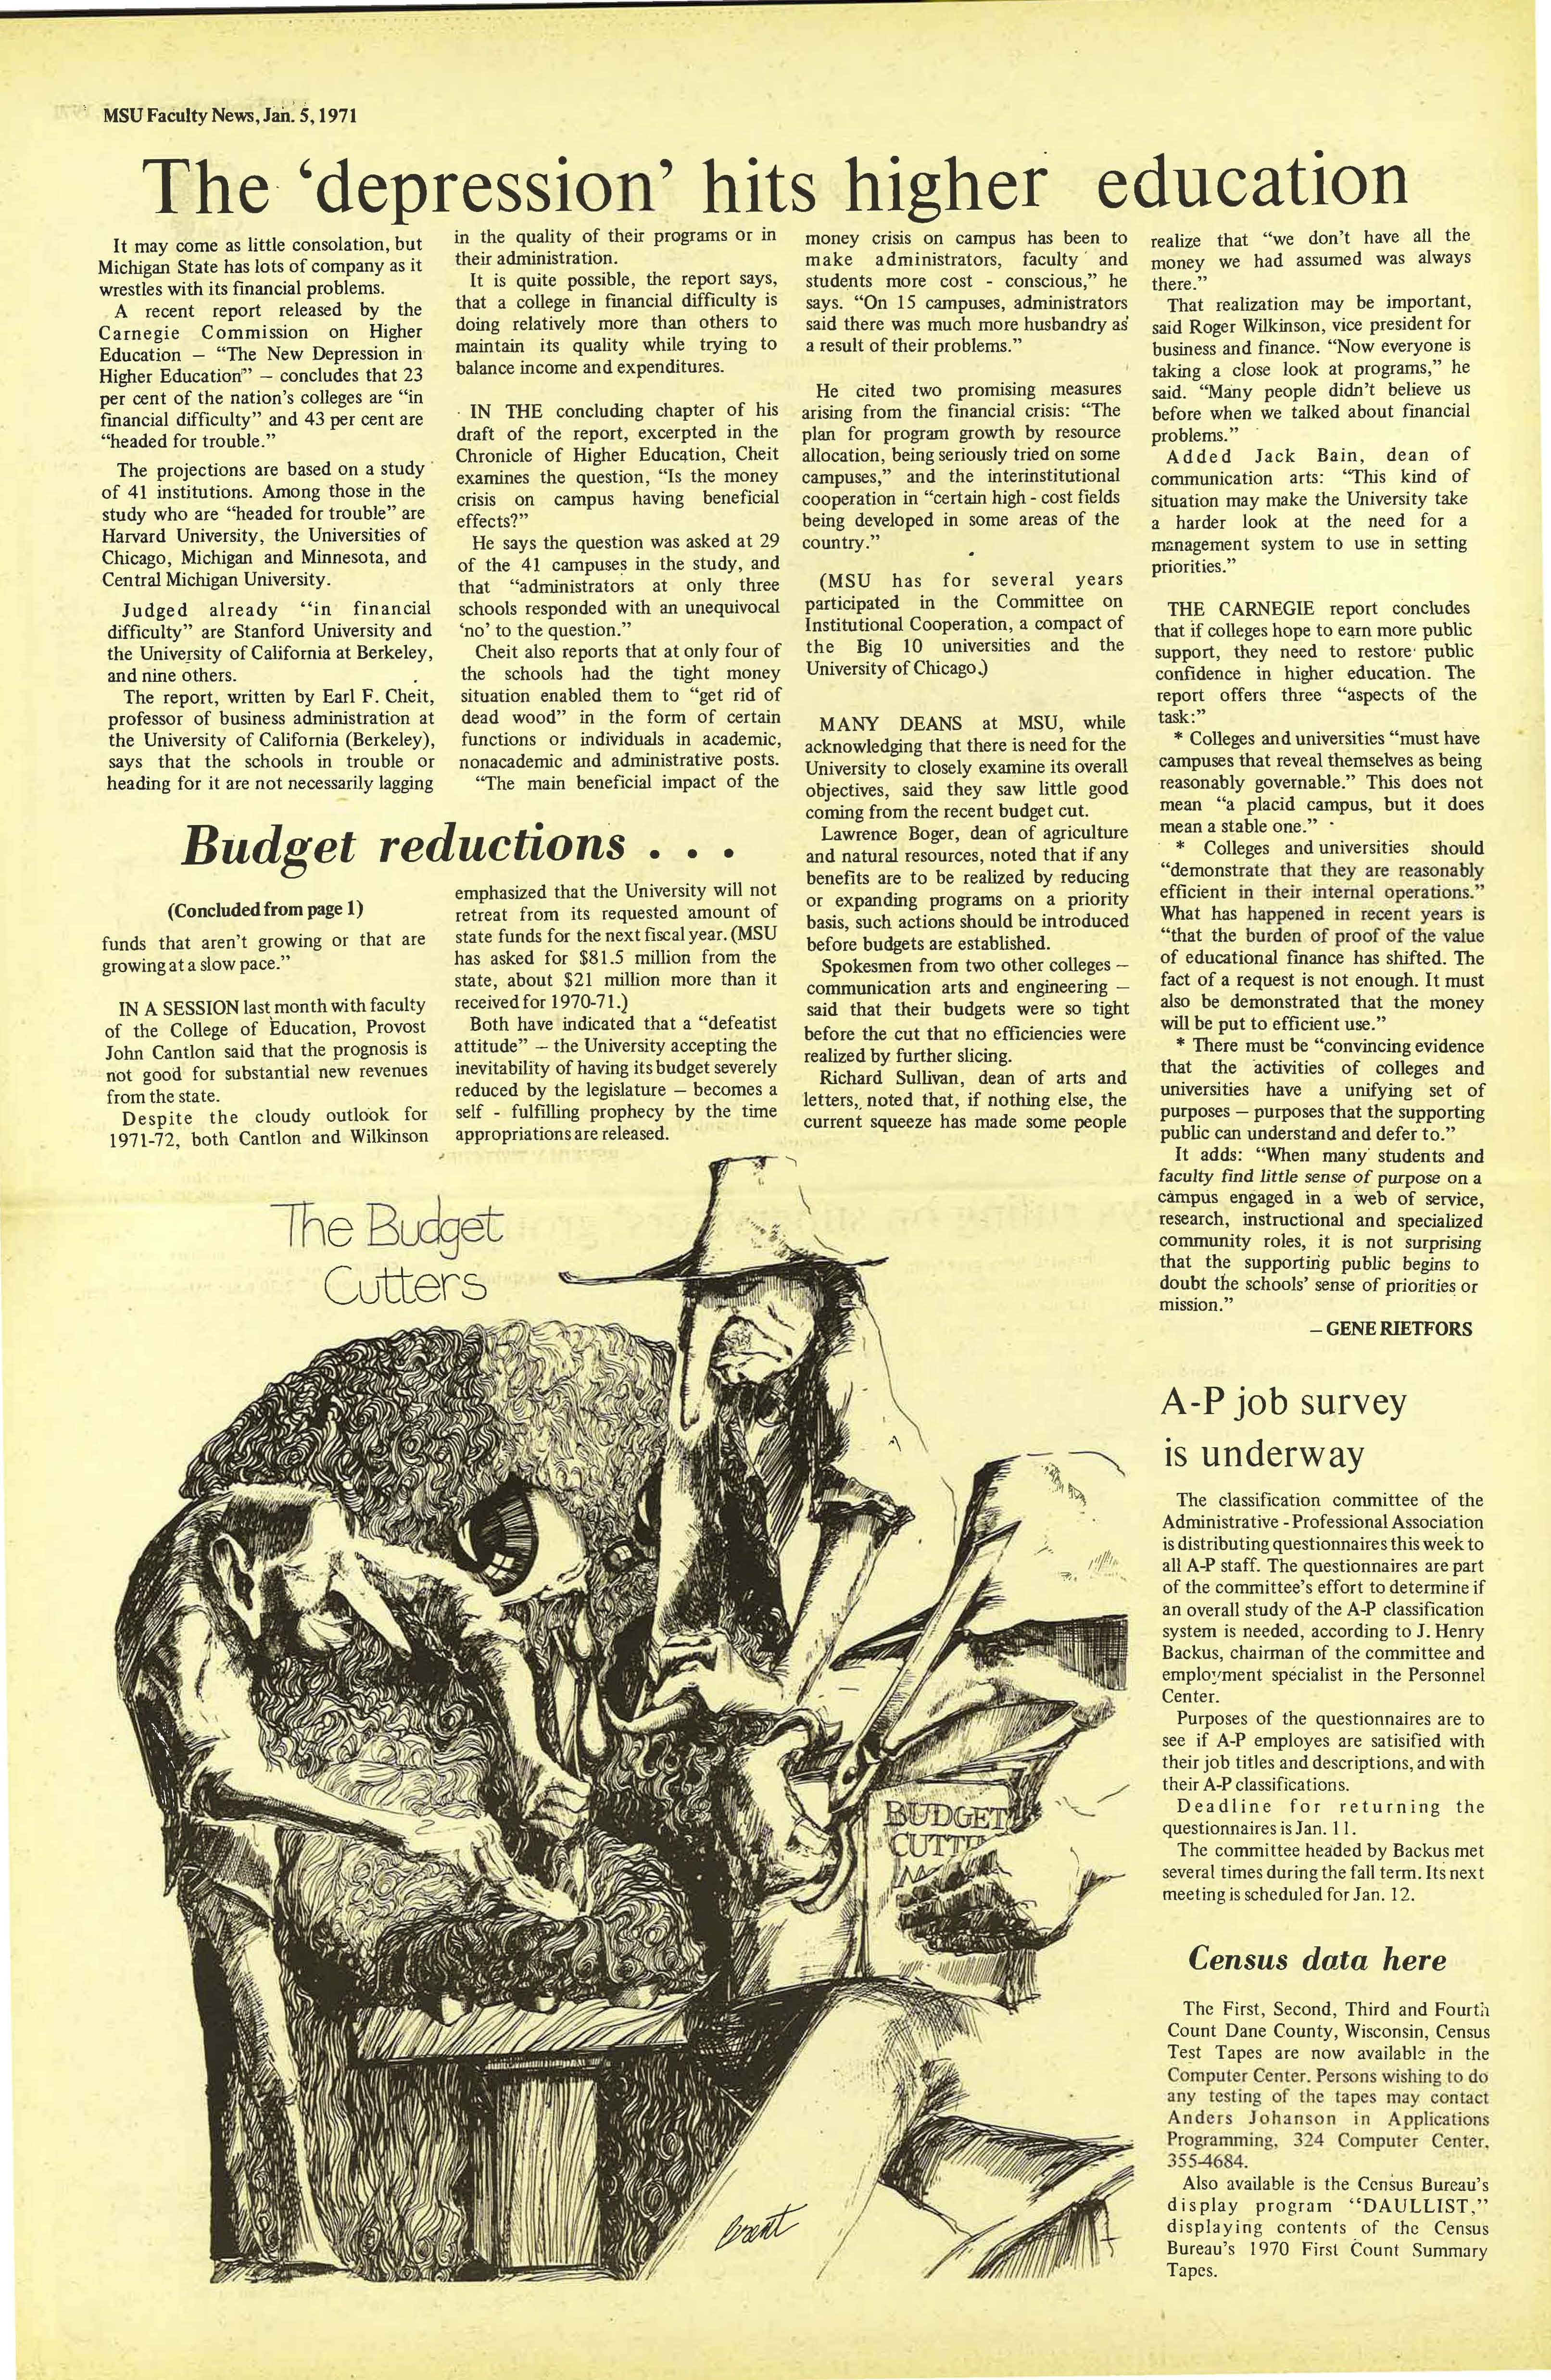 MSU News Bulletin, vol. 2, No. 18, February 23, 1971